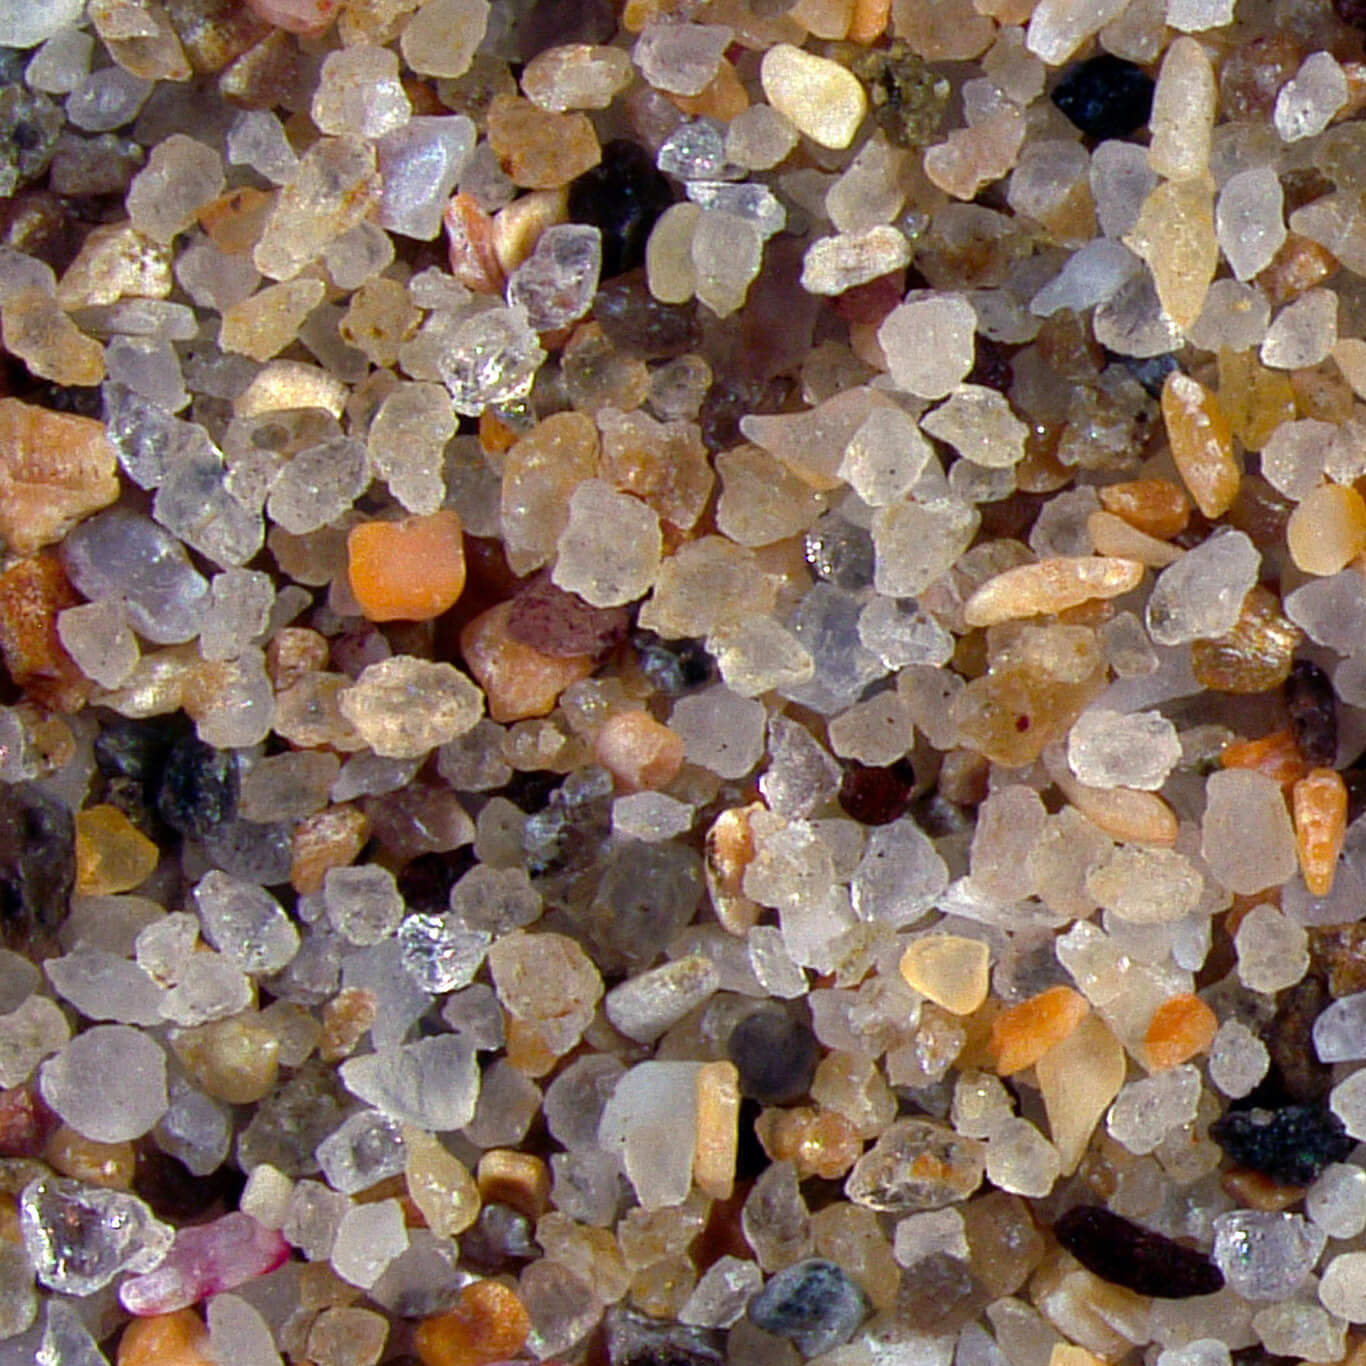 Tazones Asturias Spain Sand Grains Magnified Under Microscope 4 Square